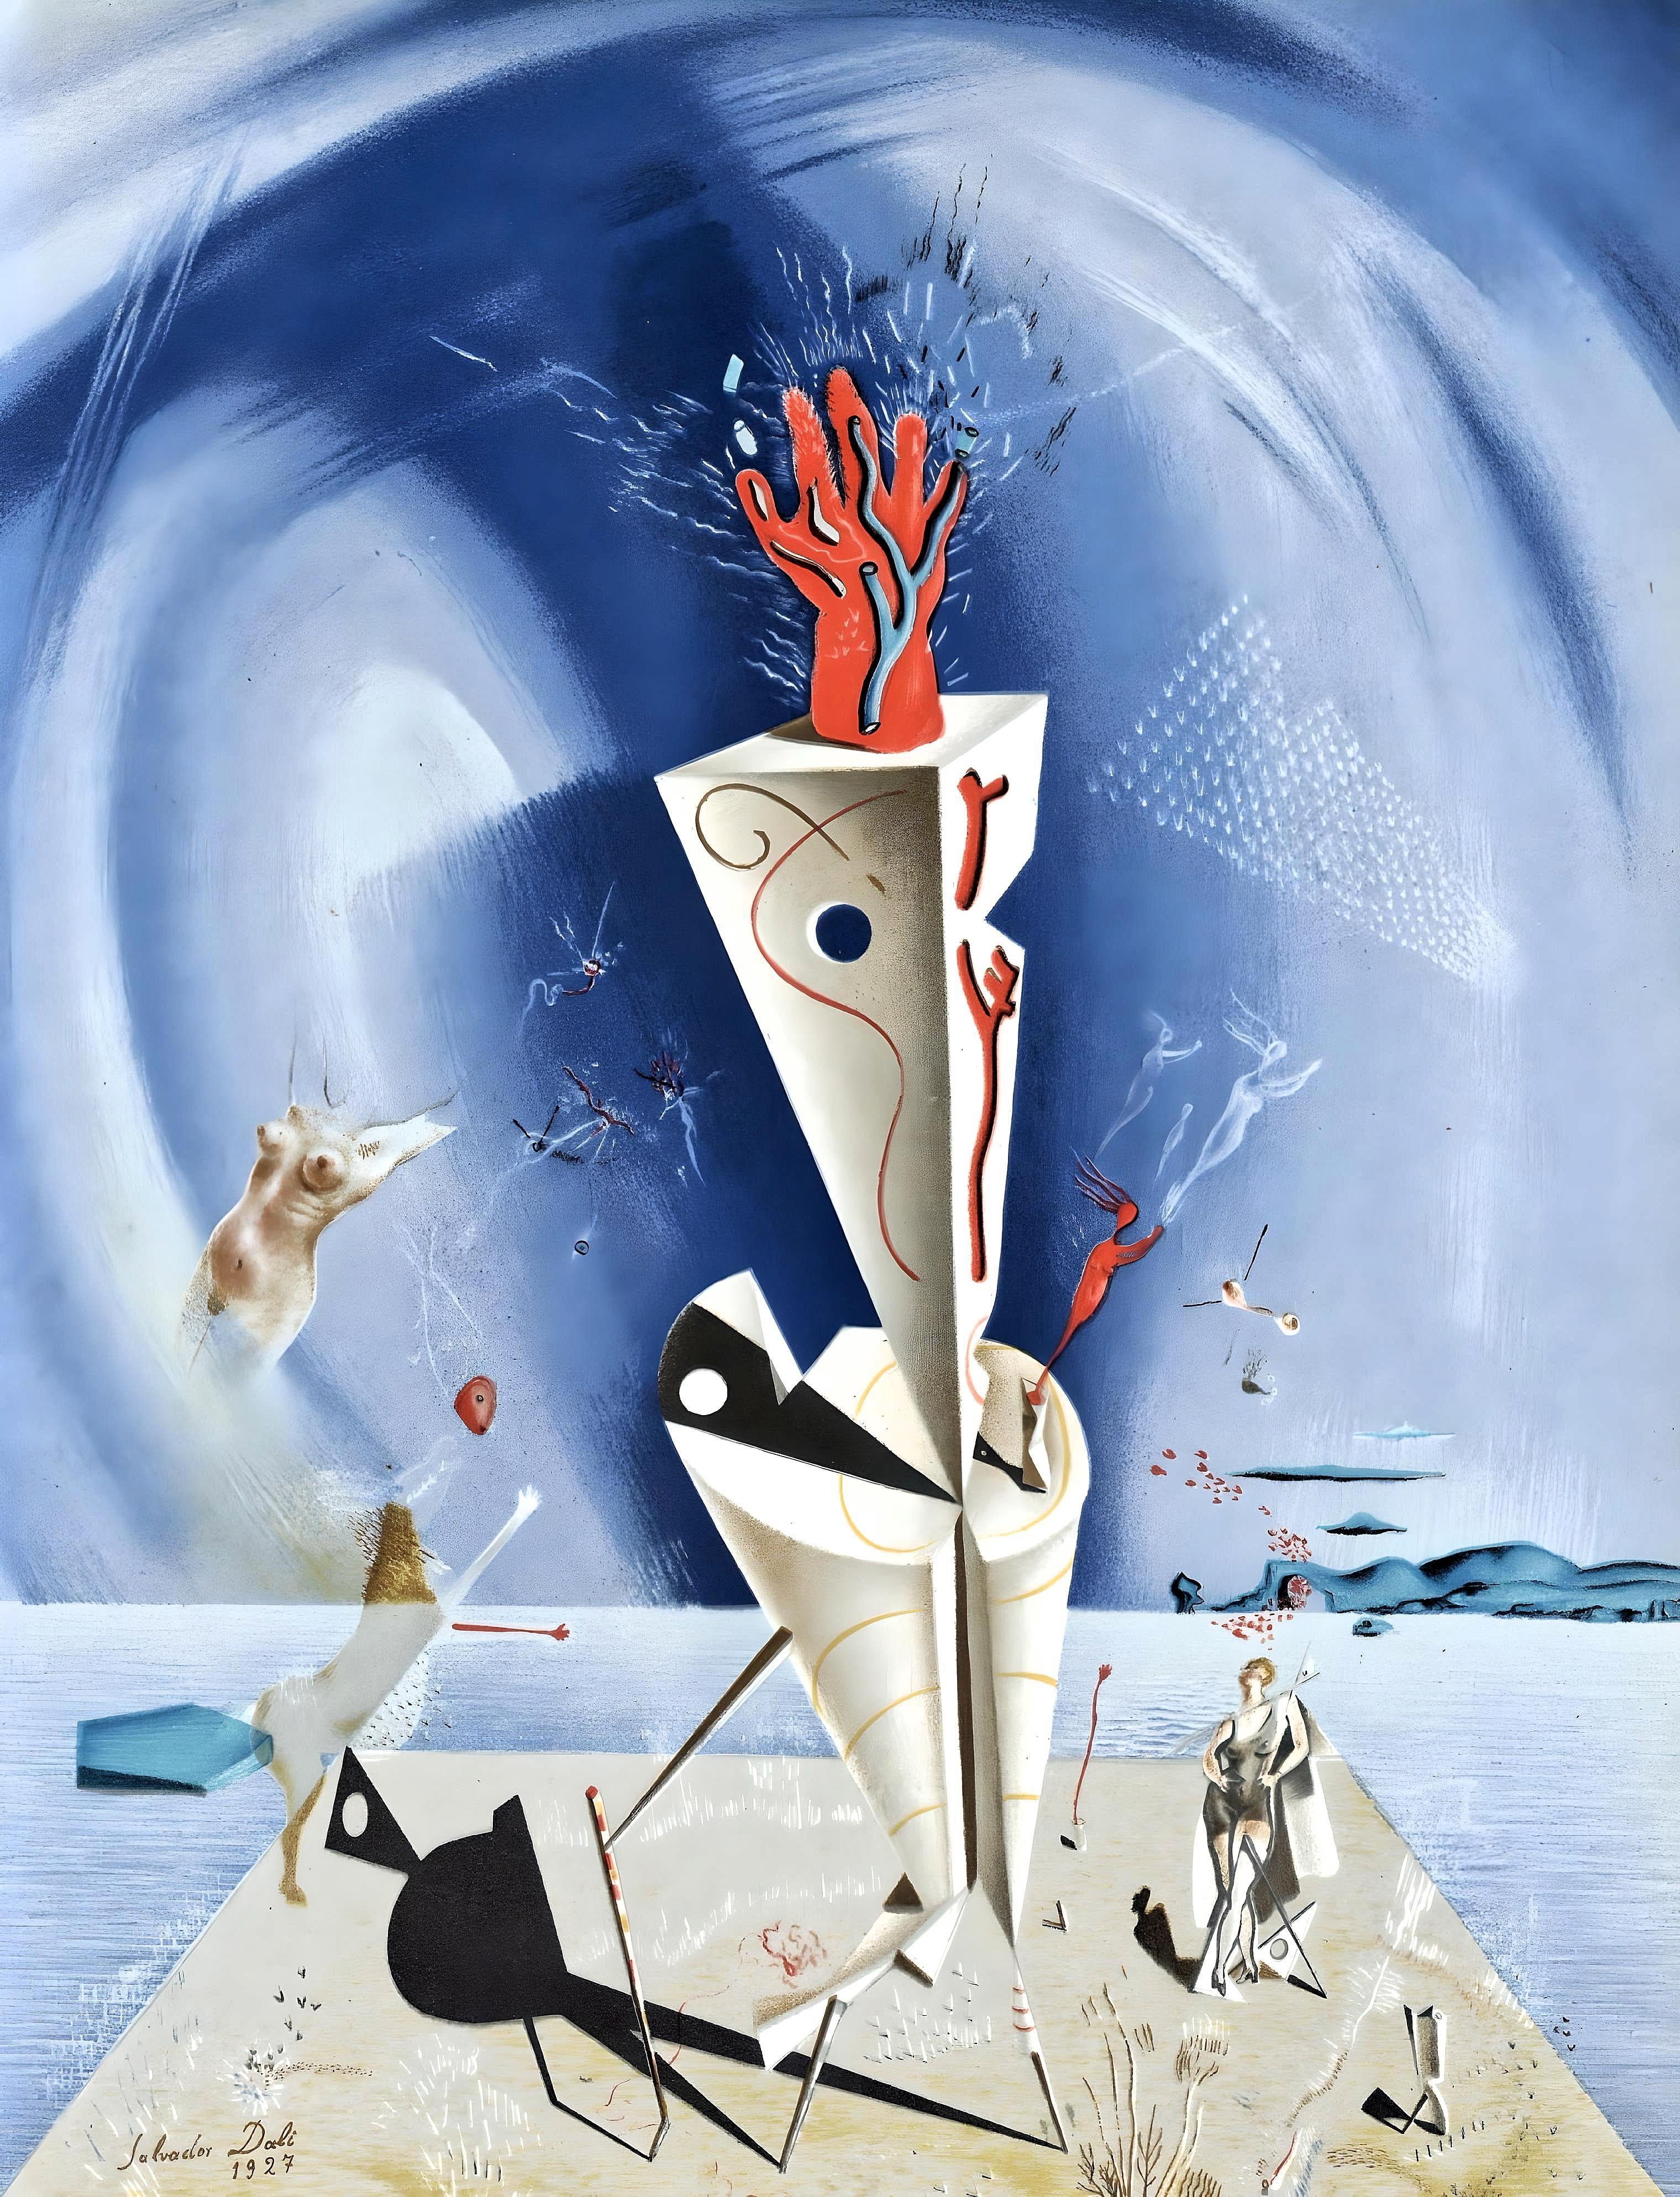 Abstract Print Salvador Dalí - Dalí, Appareil et main, XXe Siècle (d'après)